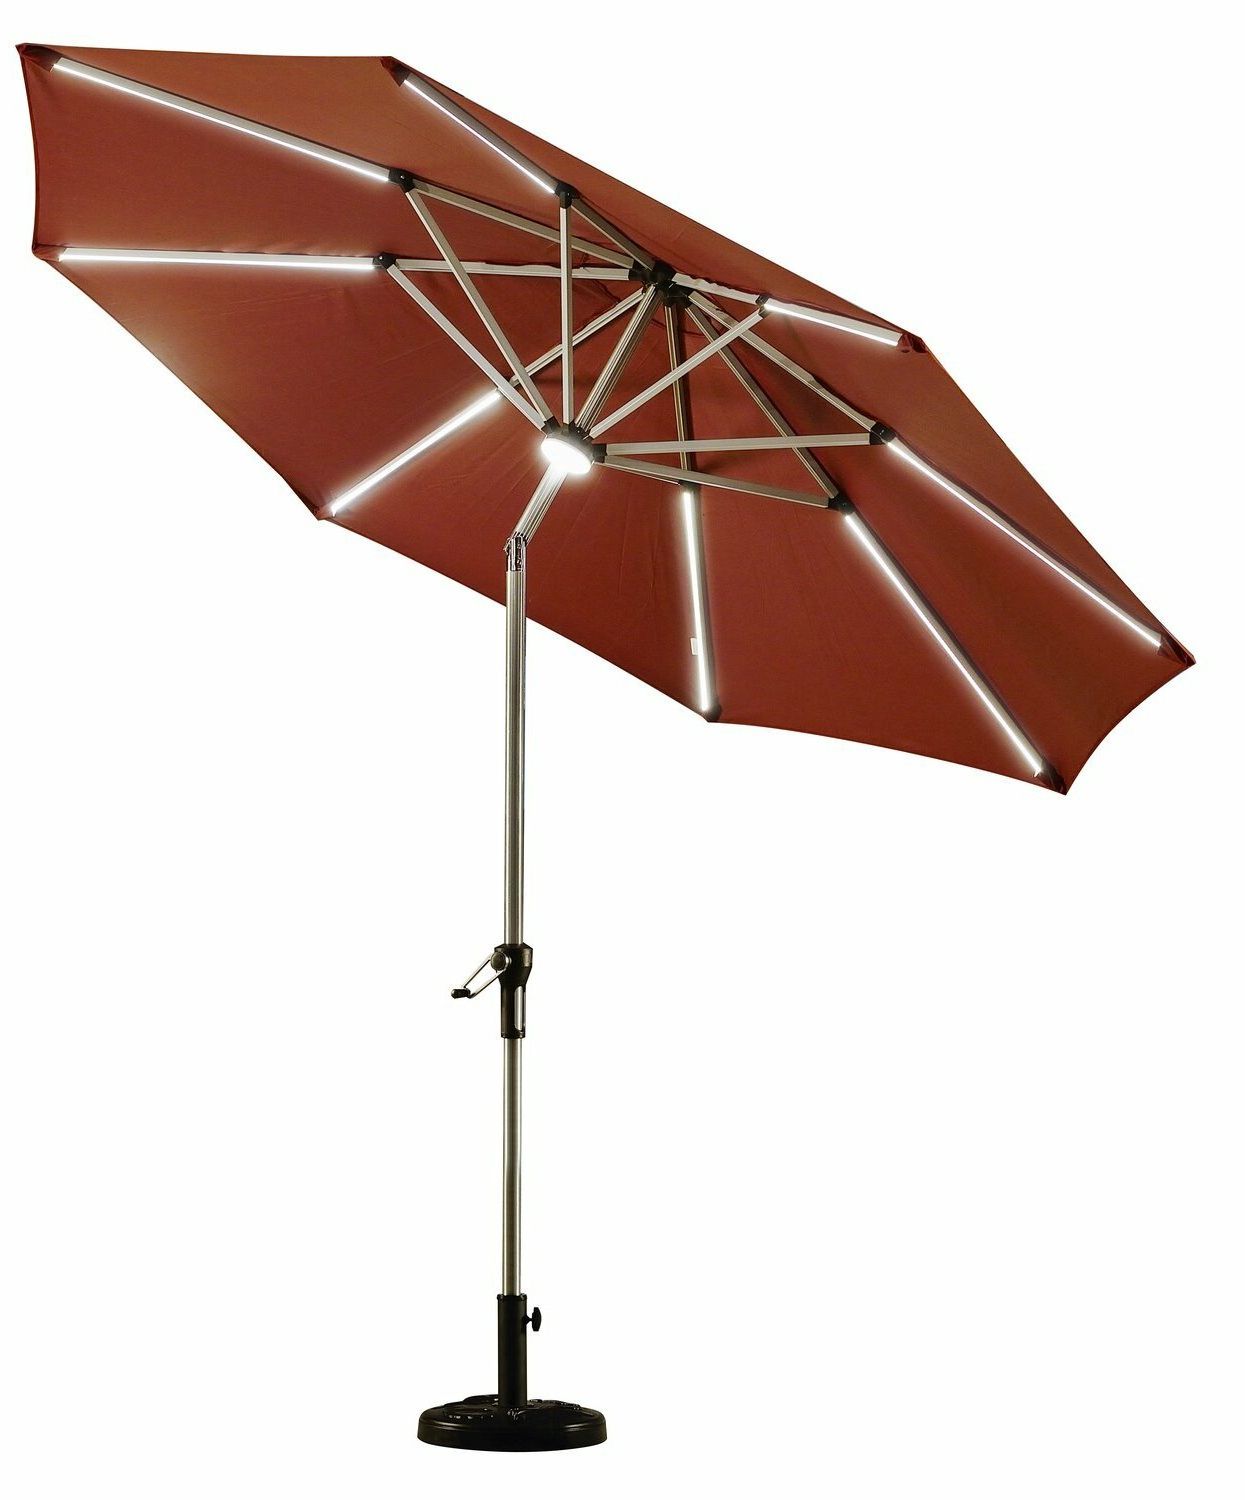 Recent Maghull 9' Market Umbrella With Hawkinge Market Umbrellas (View 4 of 20)